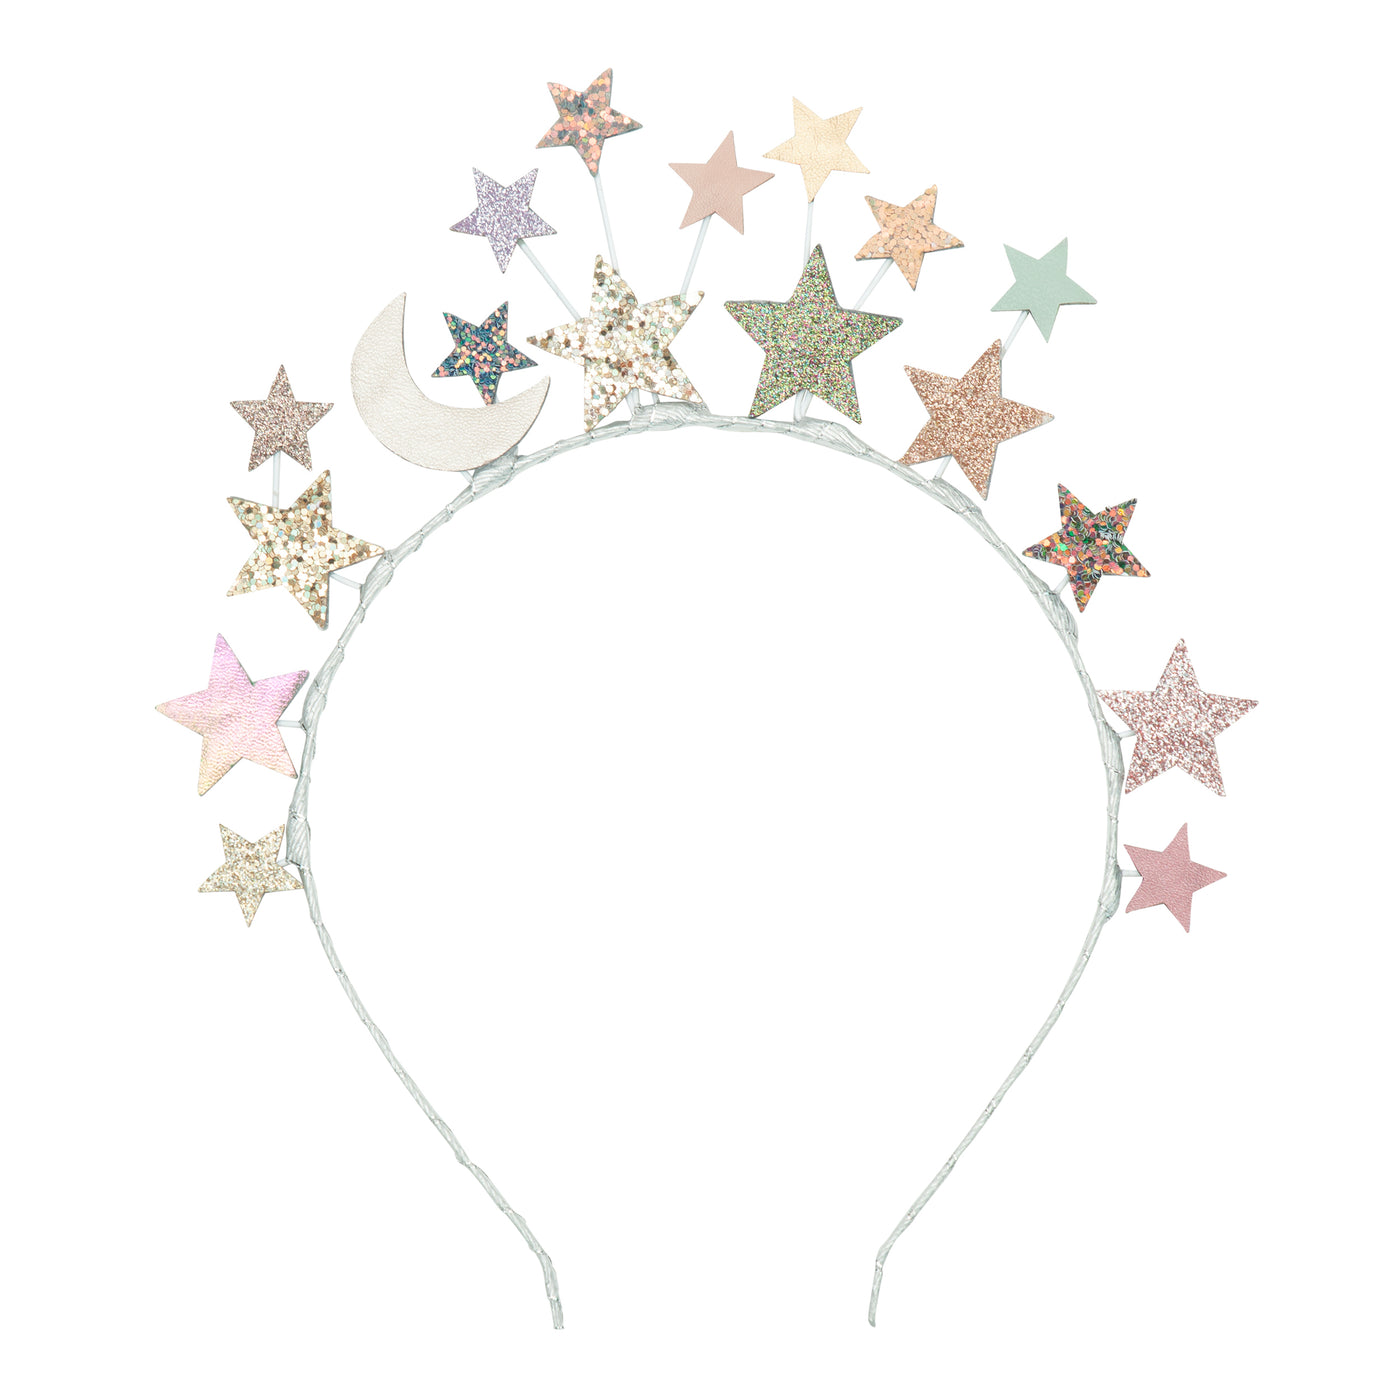 Magical star headdress